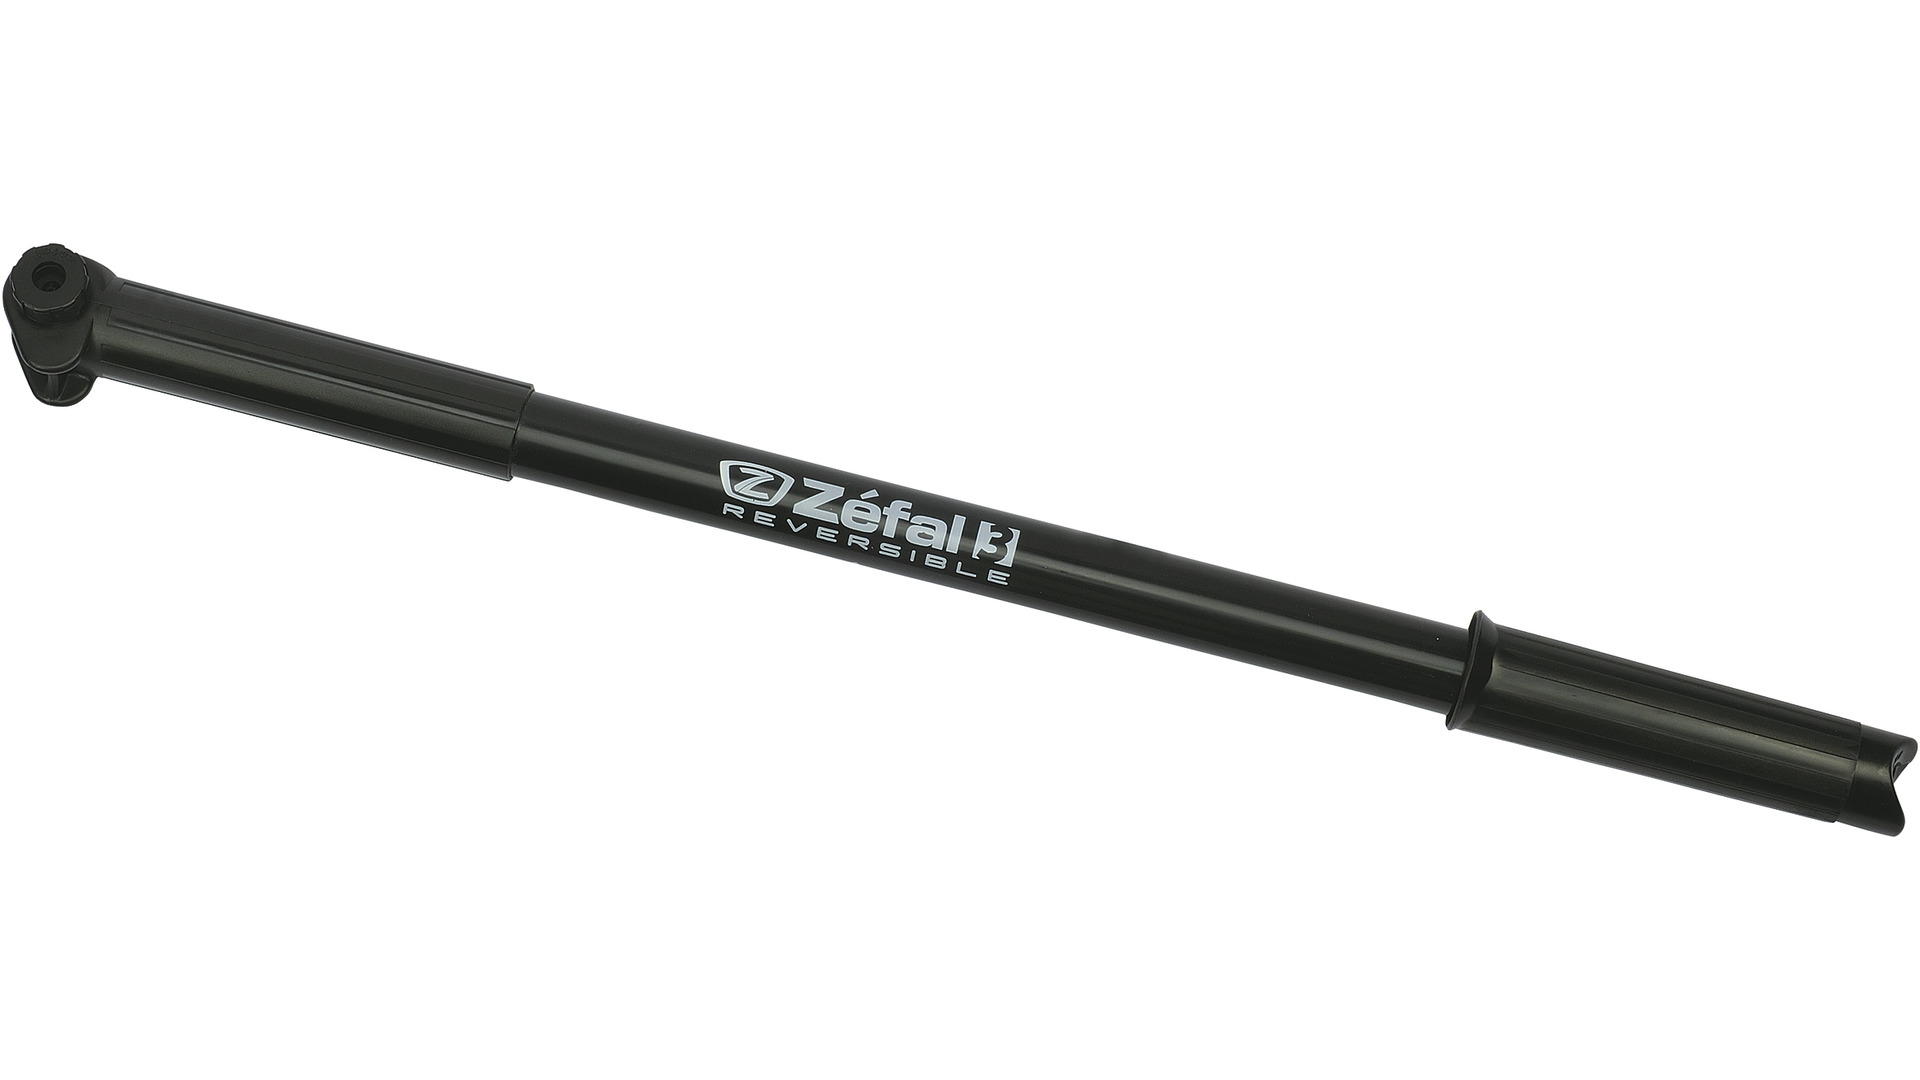 Zéfal Rahmenpumpe Reversible, Rahmenhöhe 48-53 cm, Spitzenabstand 400-450 mm - Bild 1